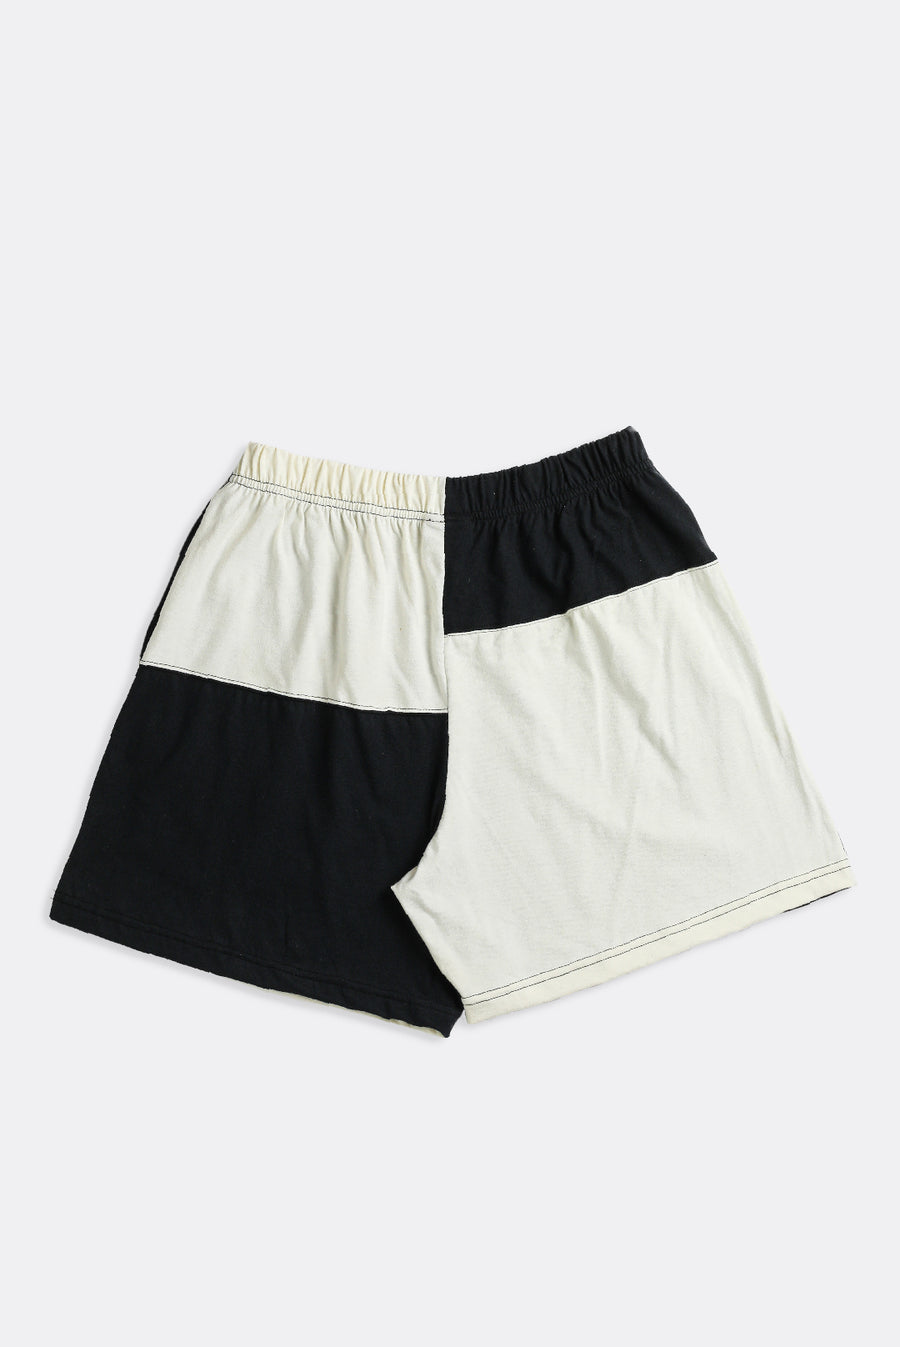 Unisex Rework Polo Patchwork Tee Shorts - XS, S, M, L, XL